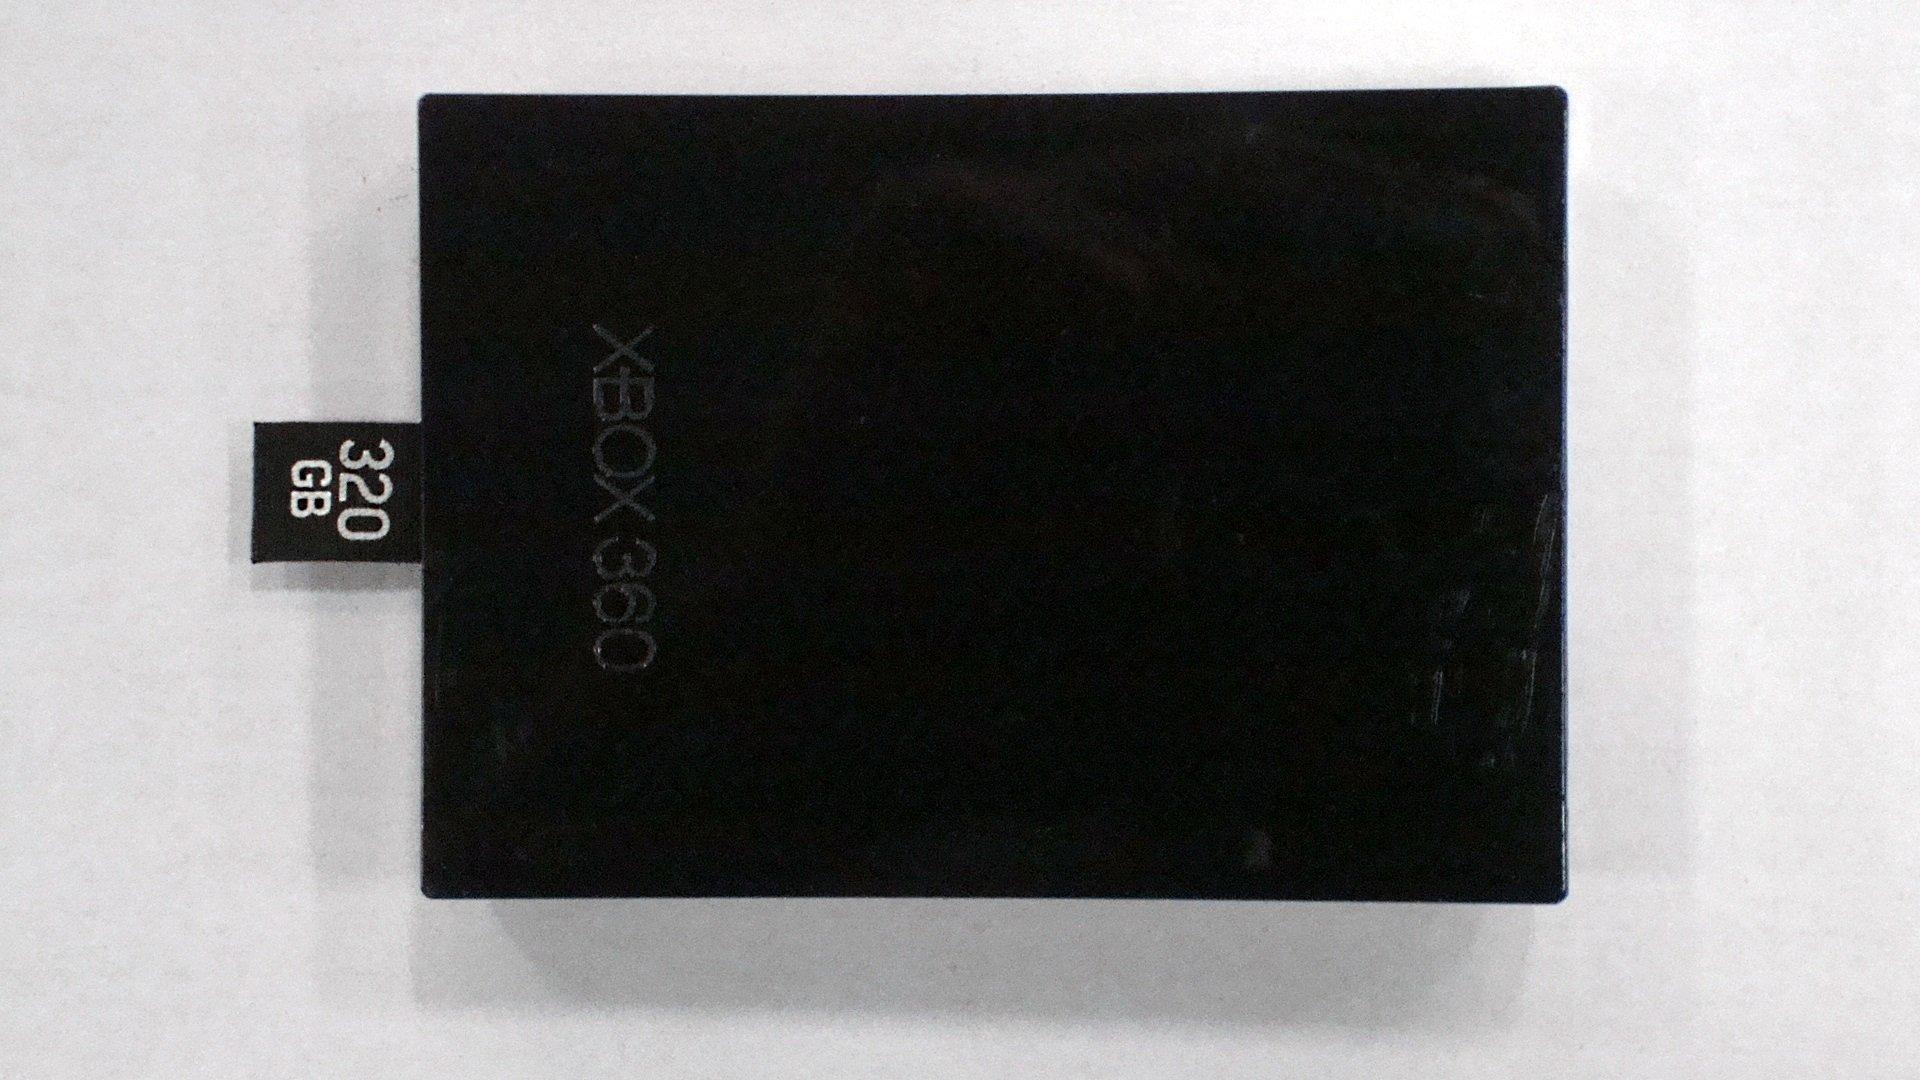 xbox 360 320gb hard drive